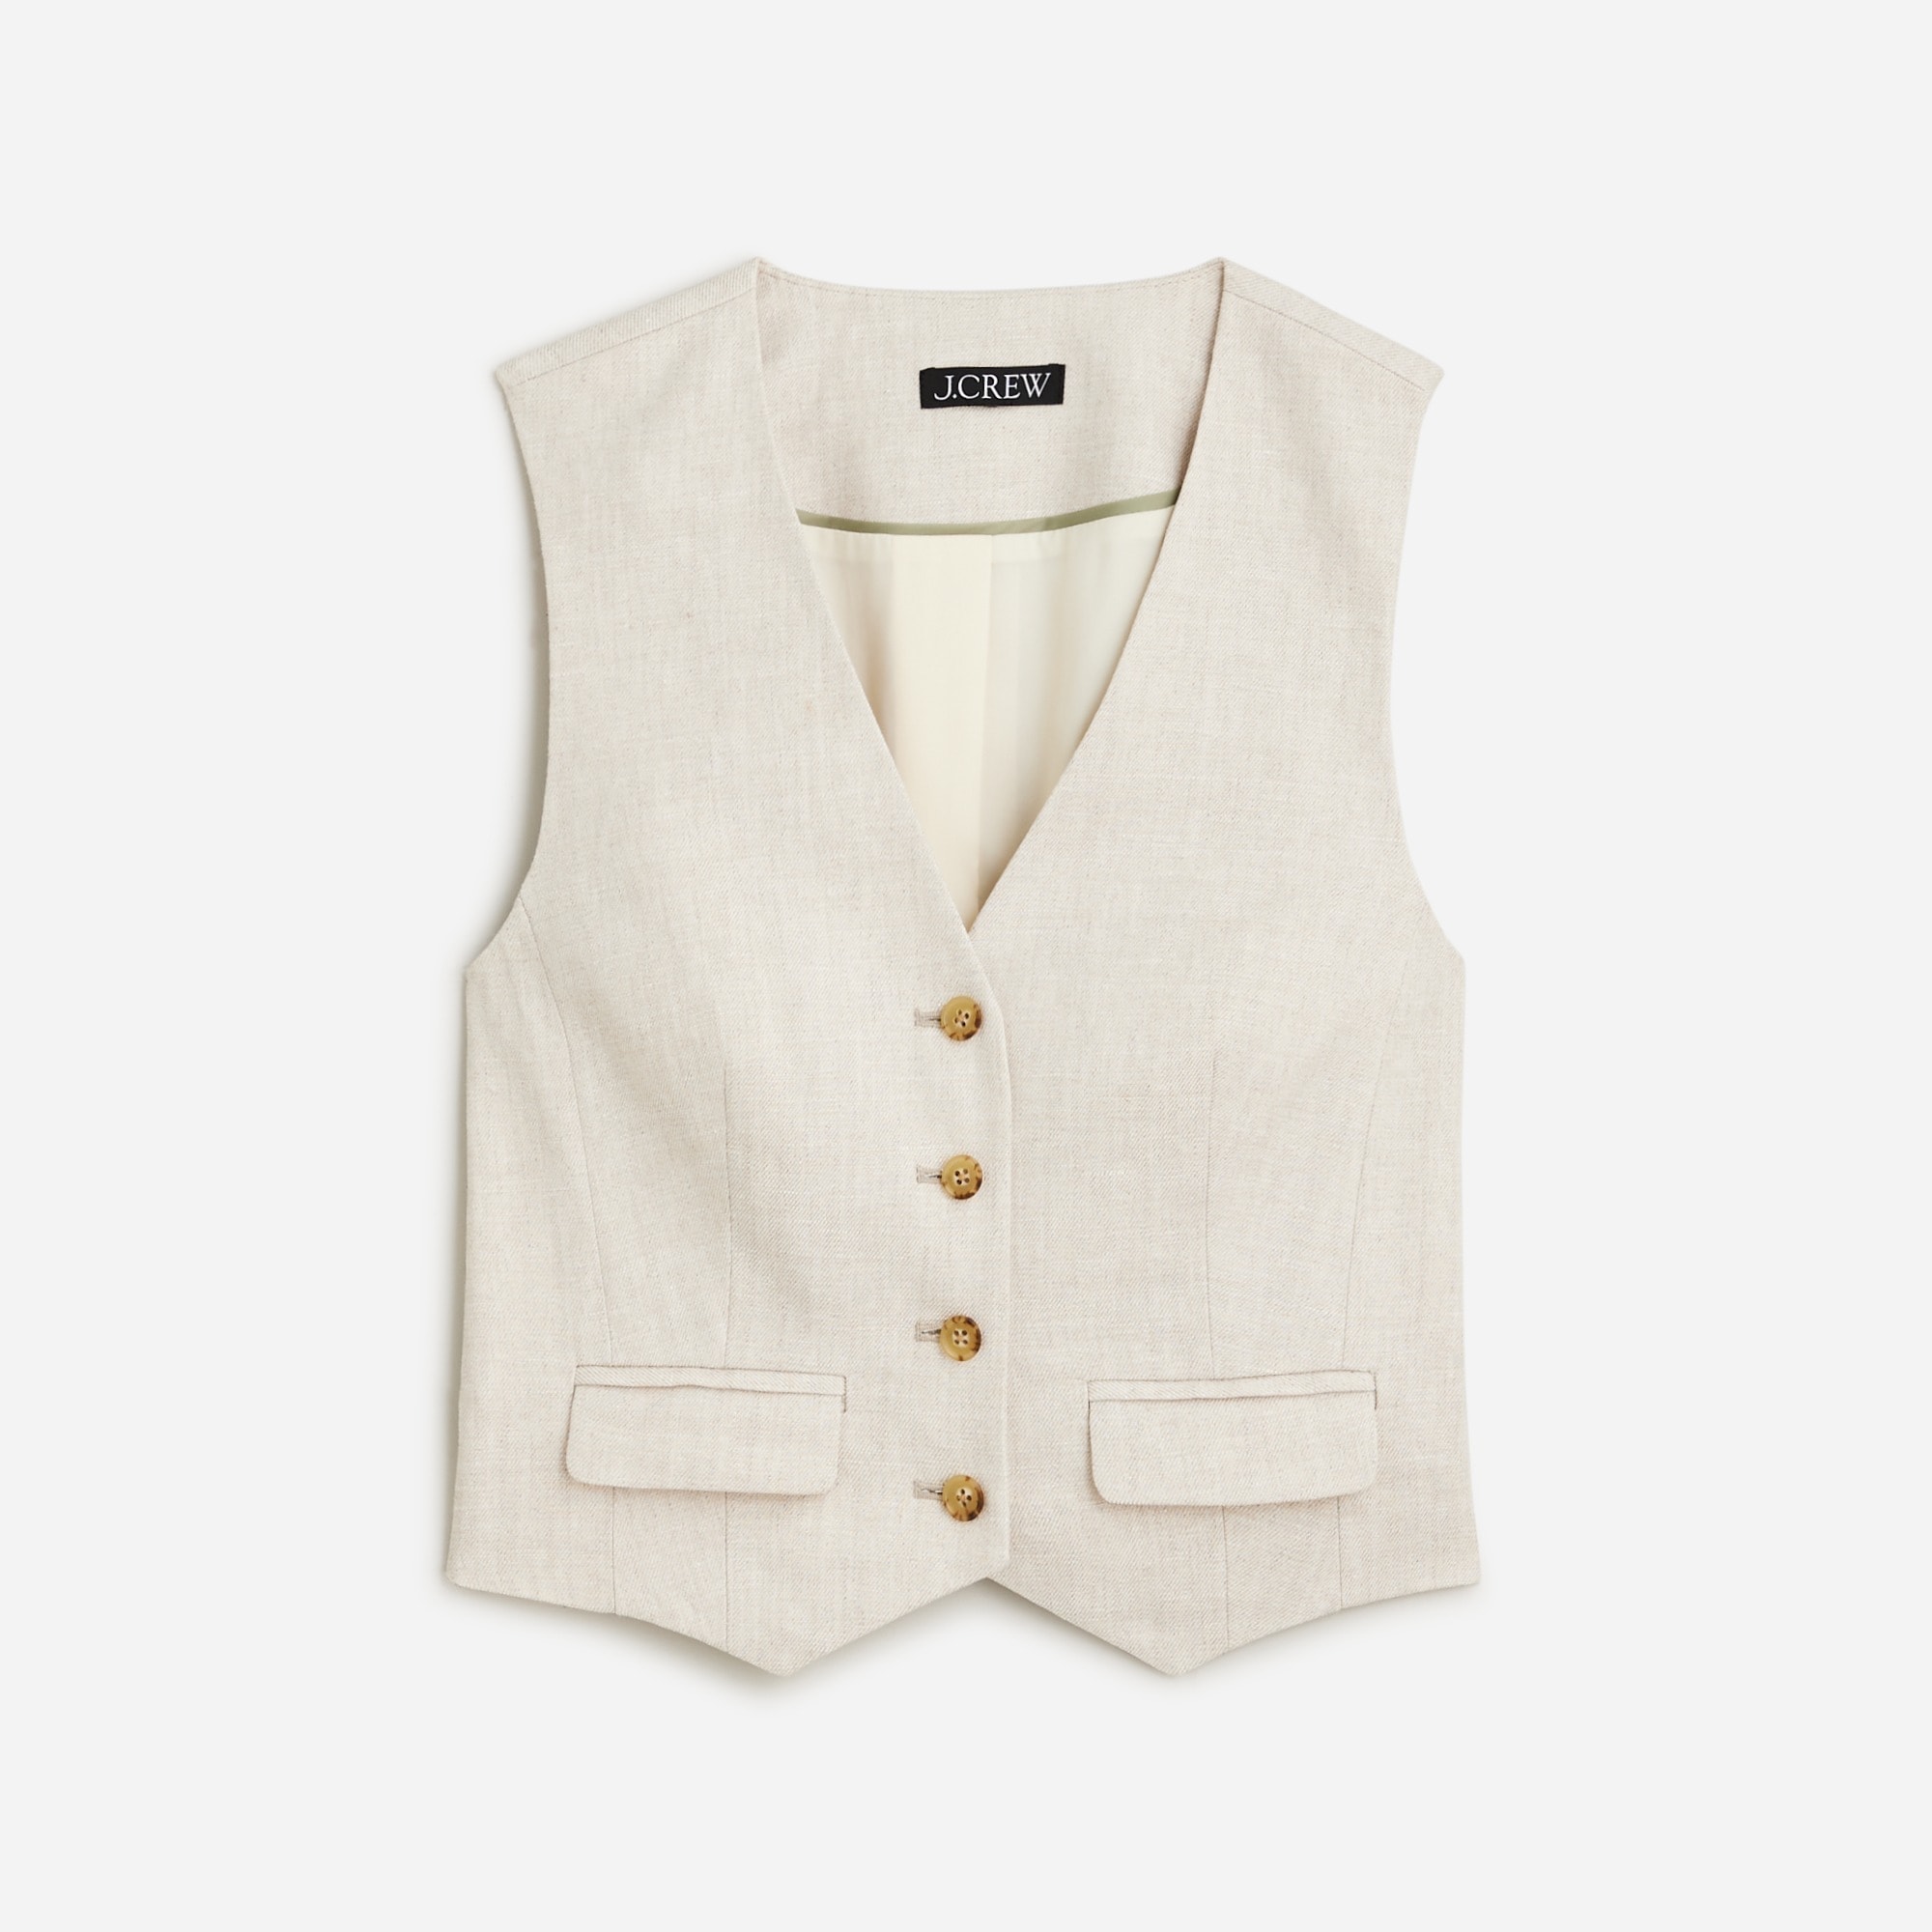  Classic vest in stretch linen blend